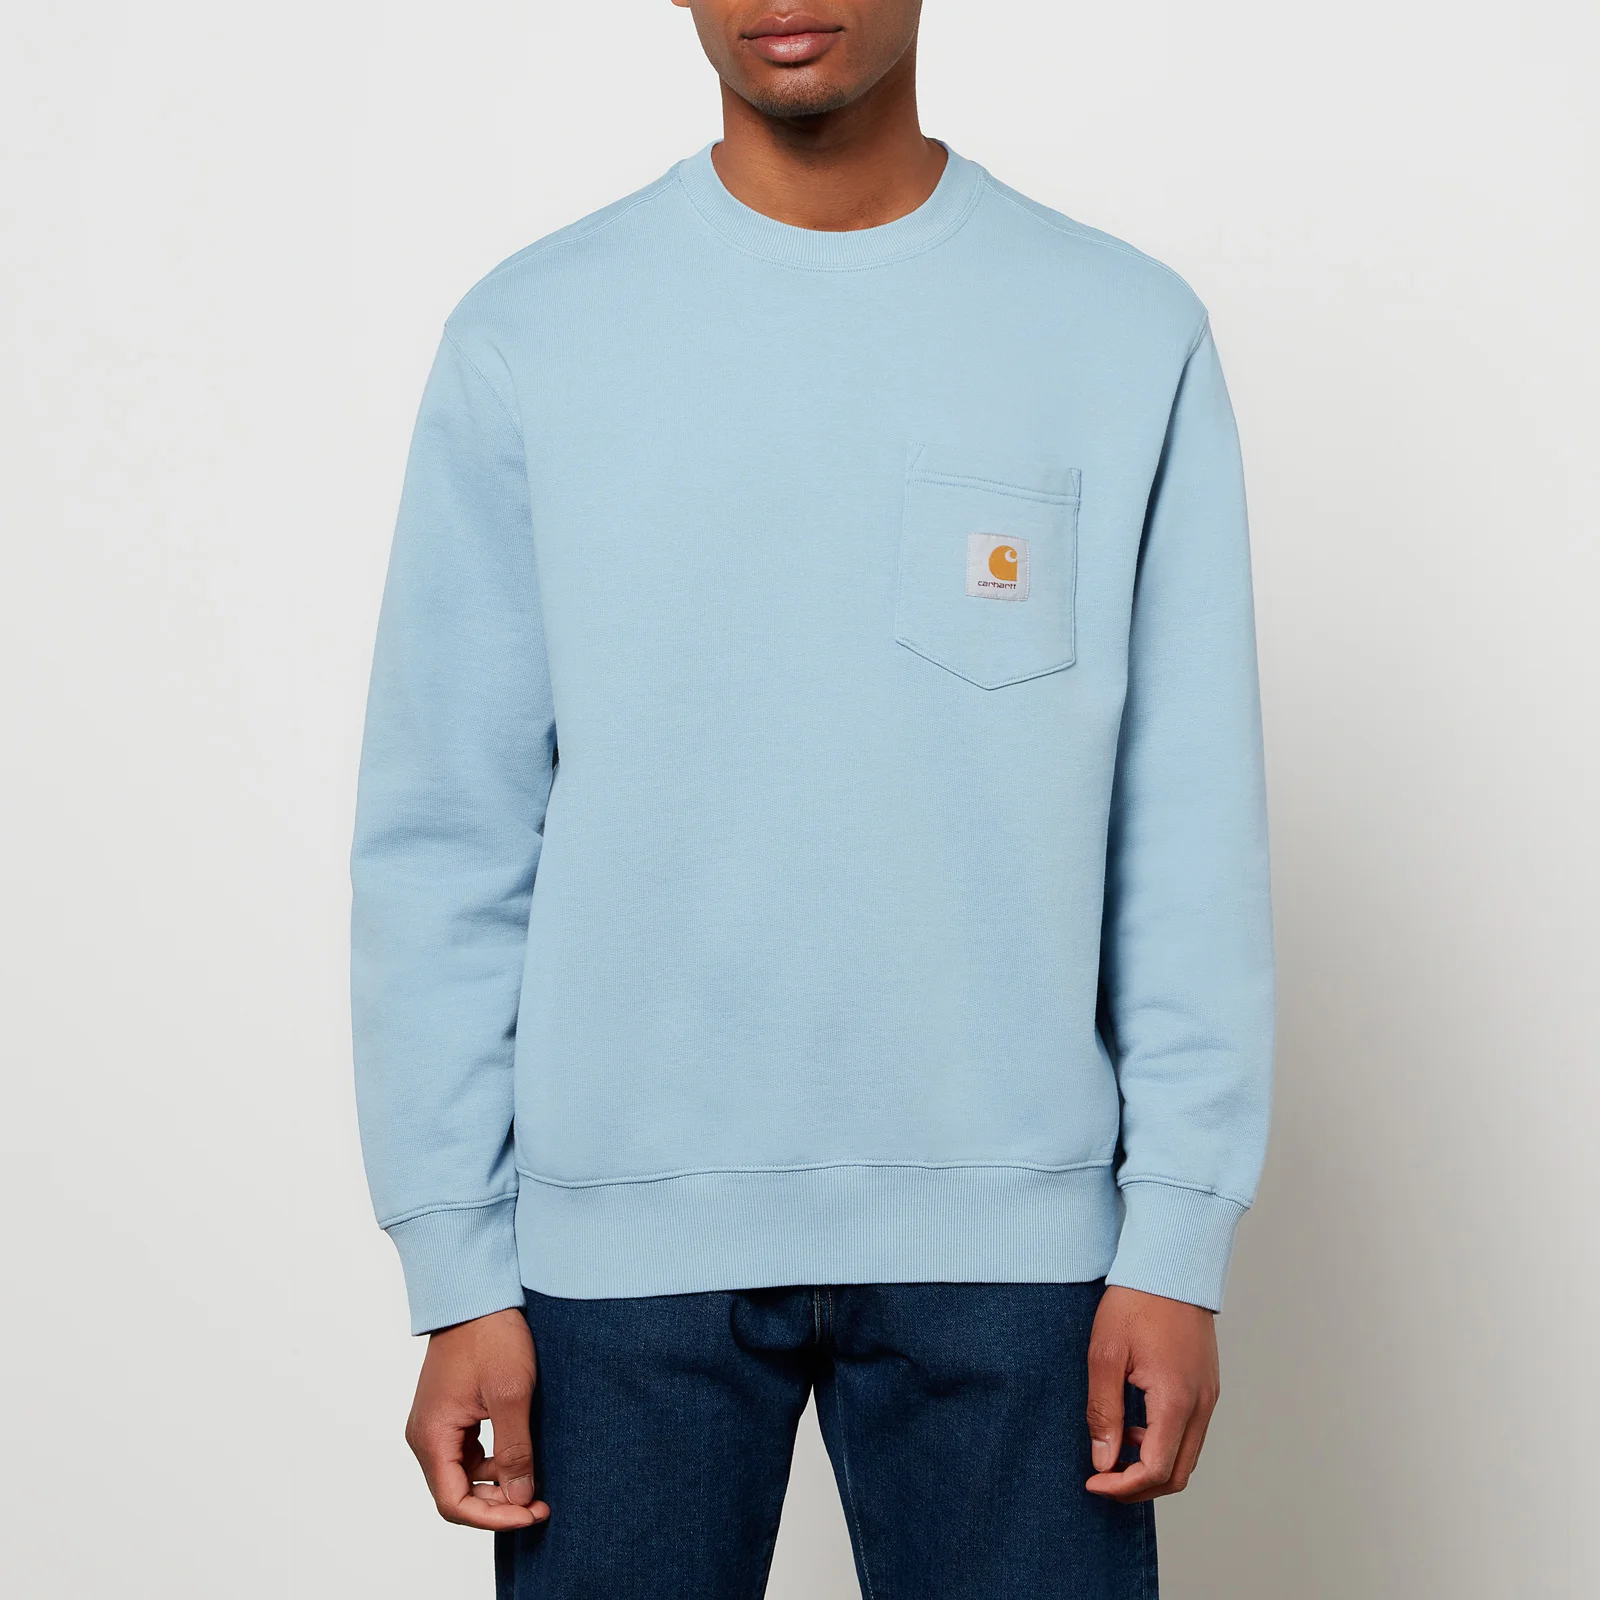 Carhartt WIP Men's Pocket Sweatshirt - Frosted Blue Image 1